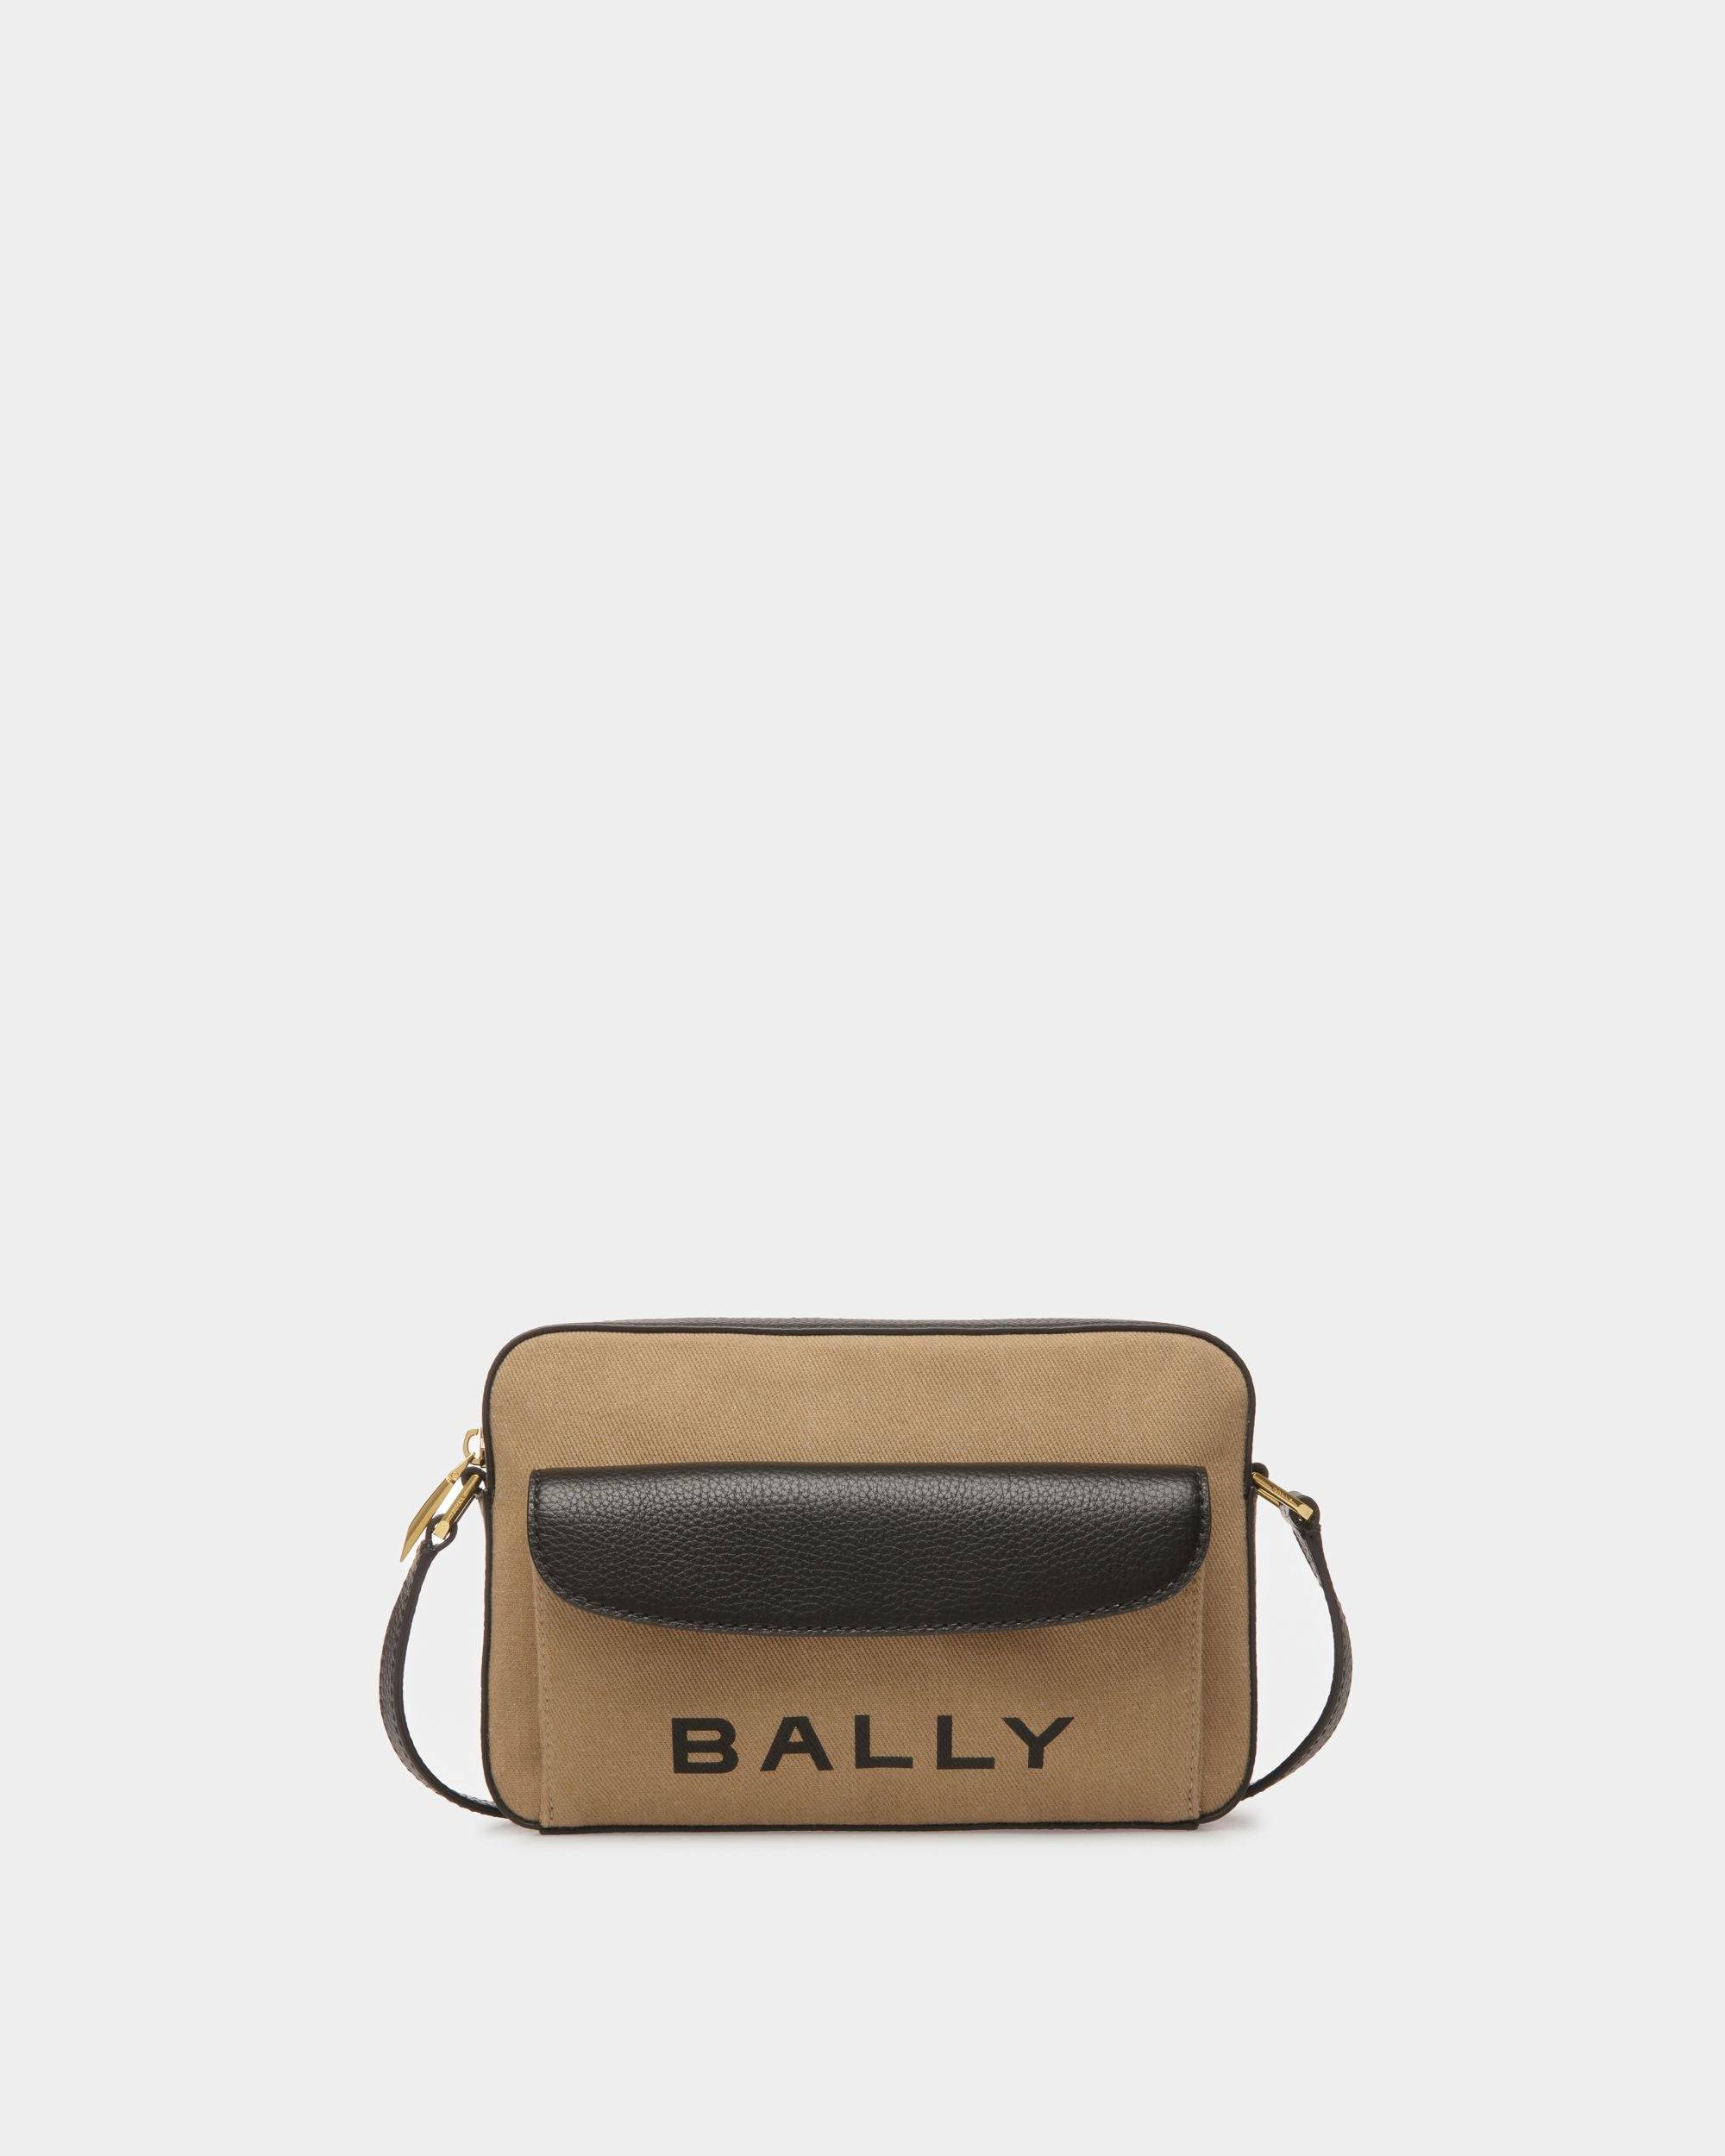 Women's Bar Crossbody Bag In Sand And Black Fabric | Bally | Still Life Front